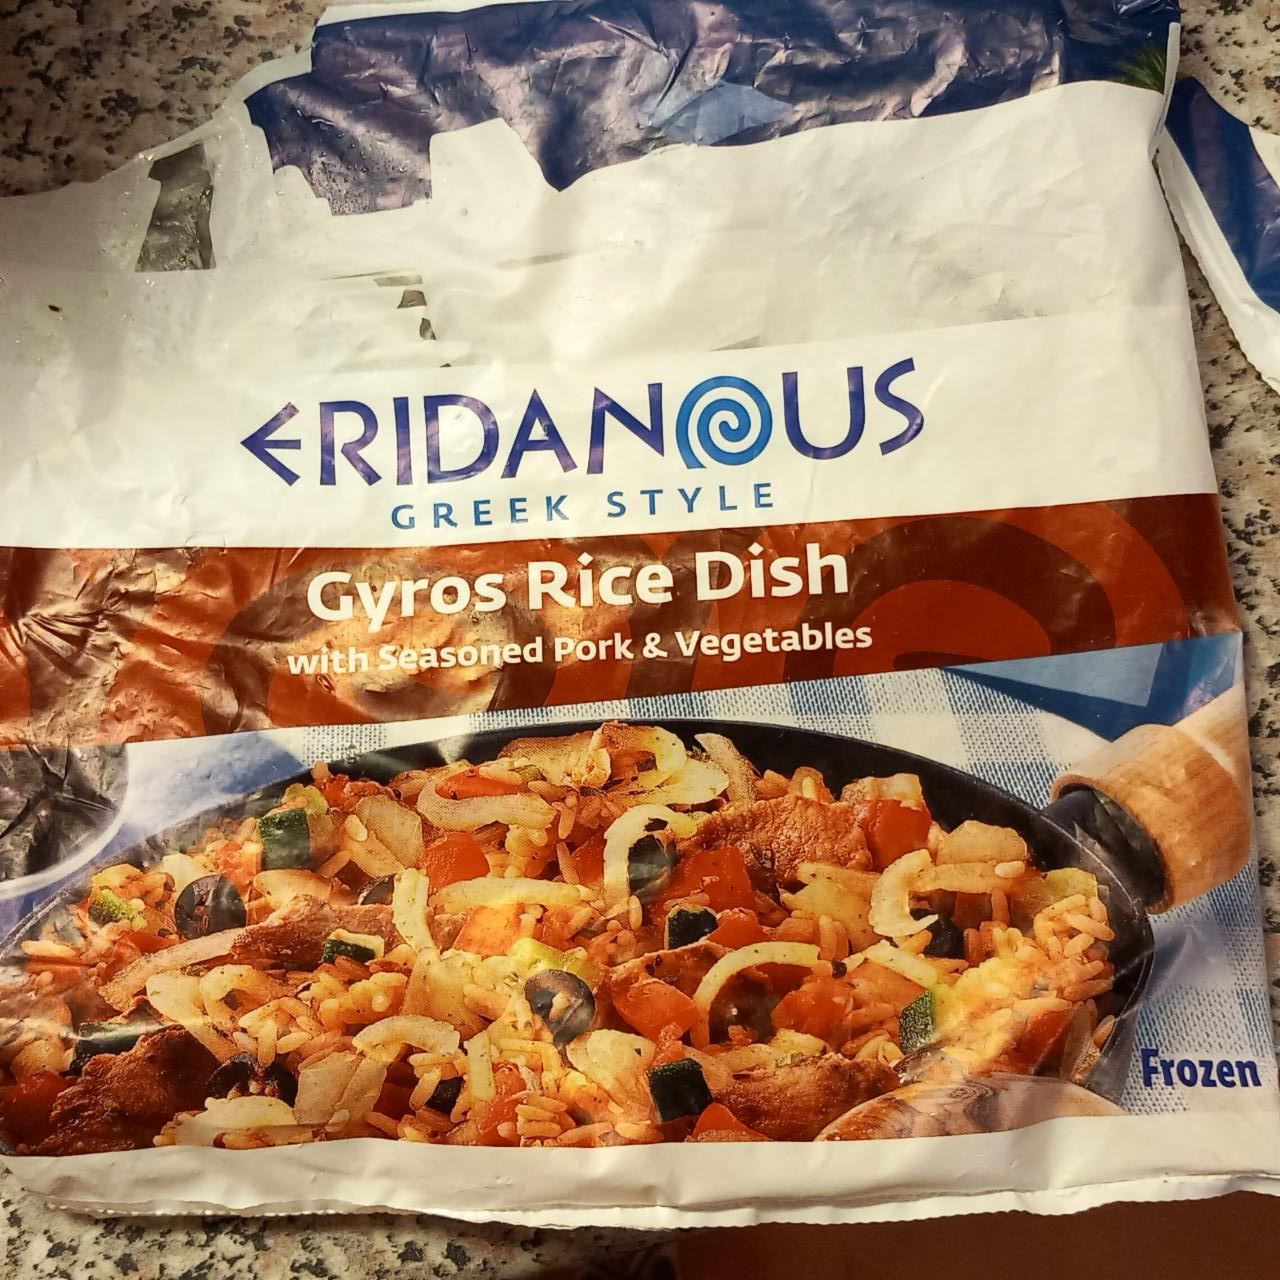 Képek - Gyros rice dish with seasoned pork & vegetables Eridanous